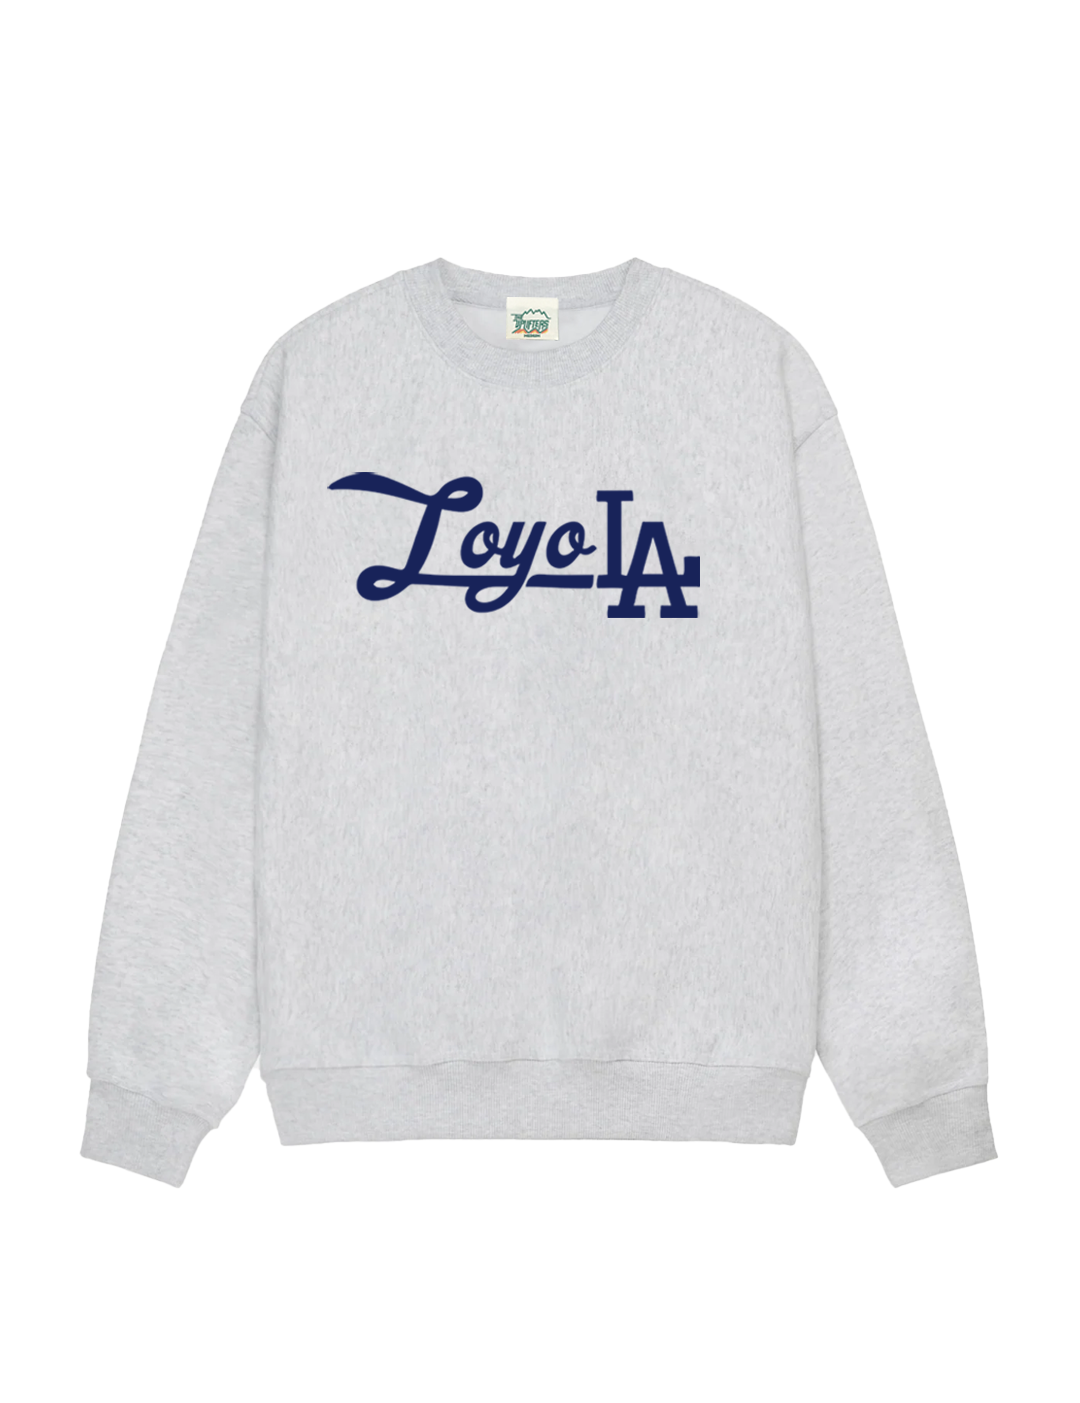 Loyola-greysweatshirt.png